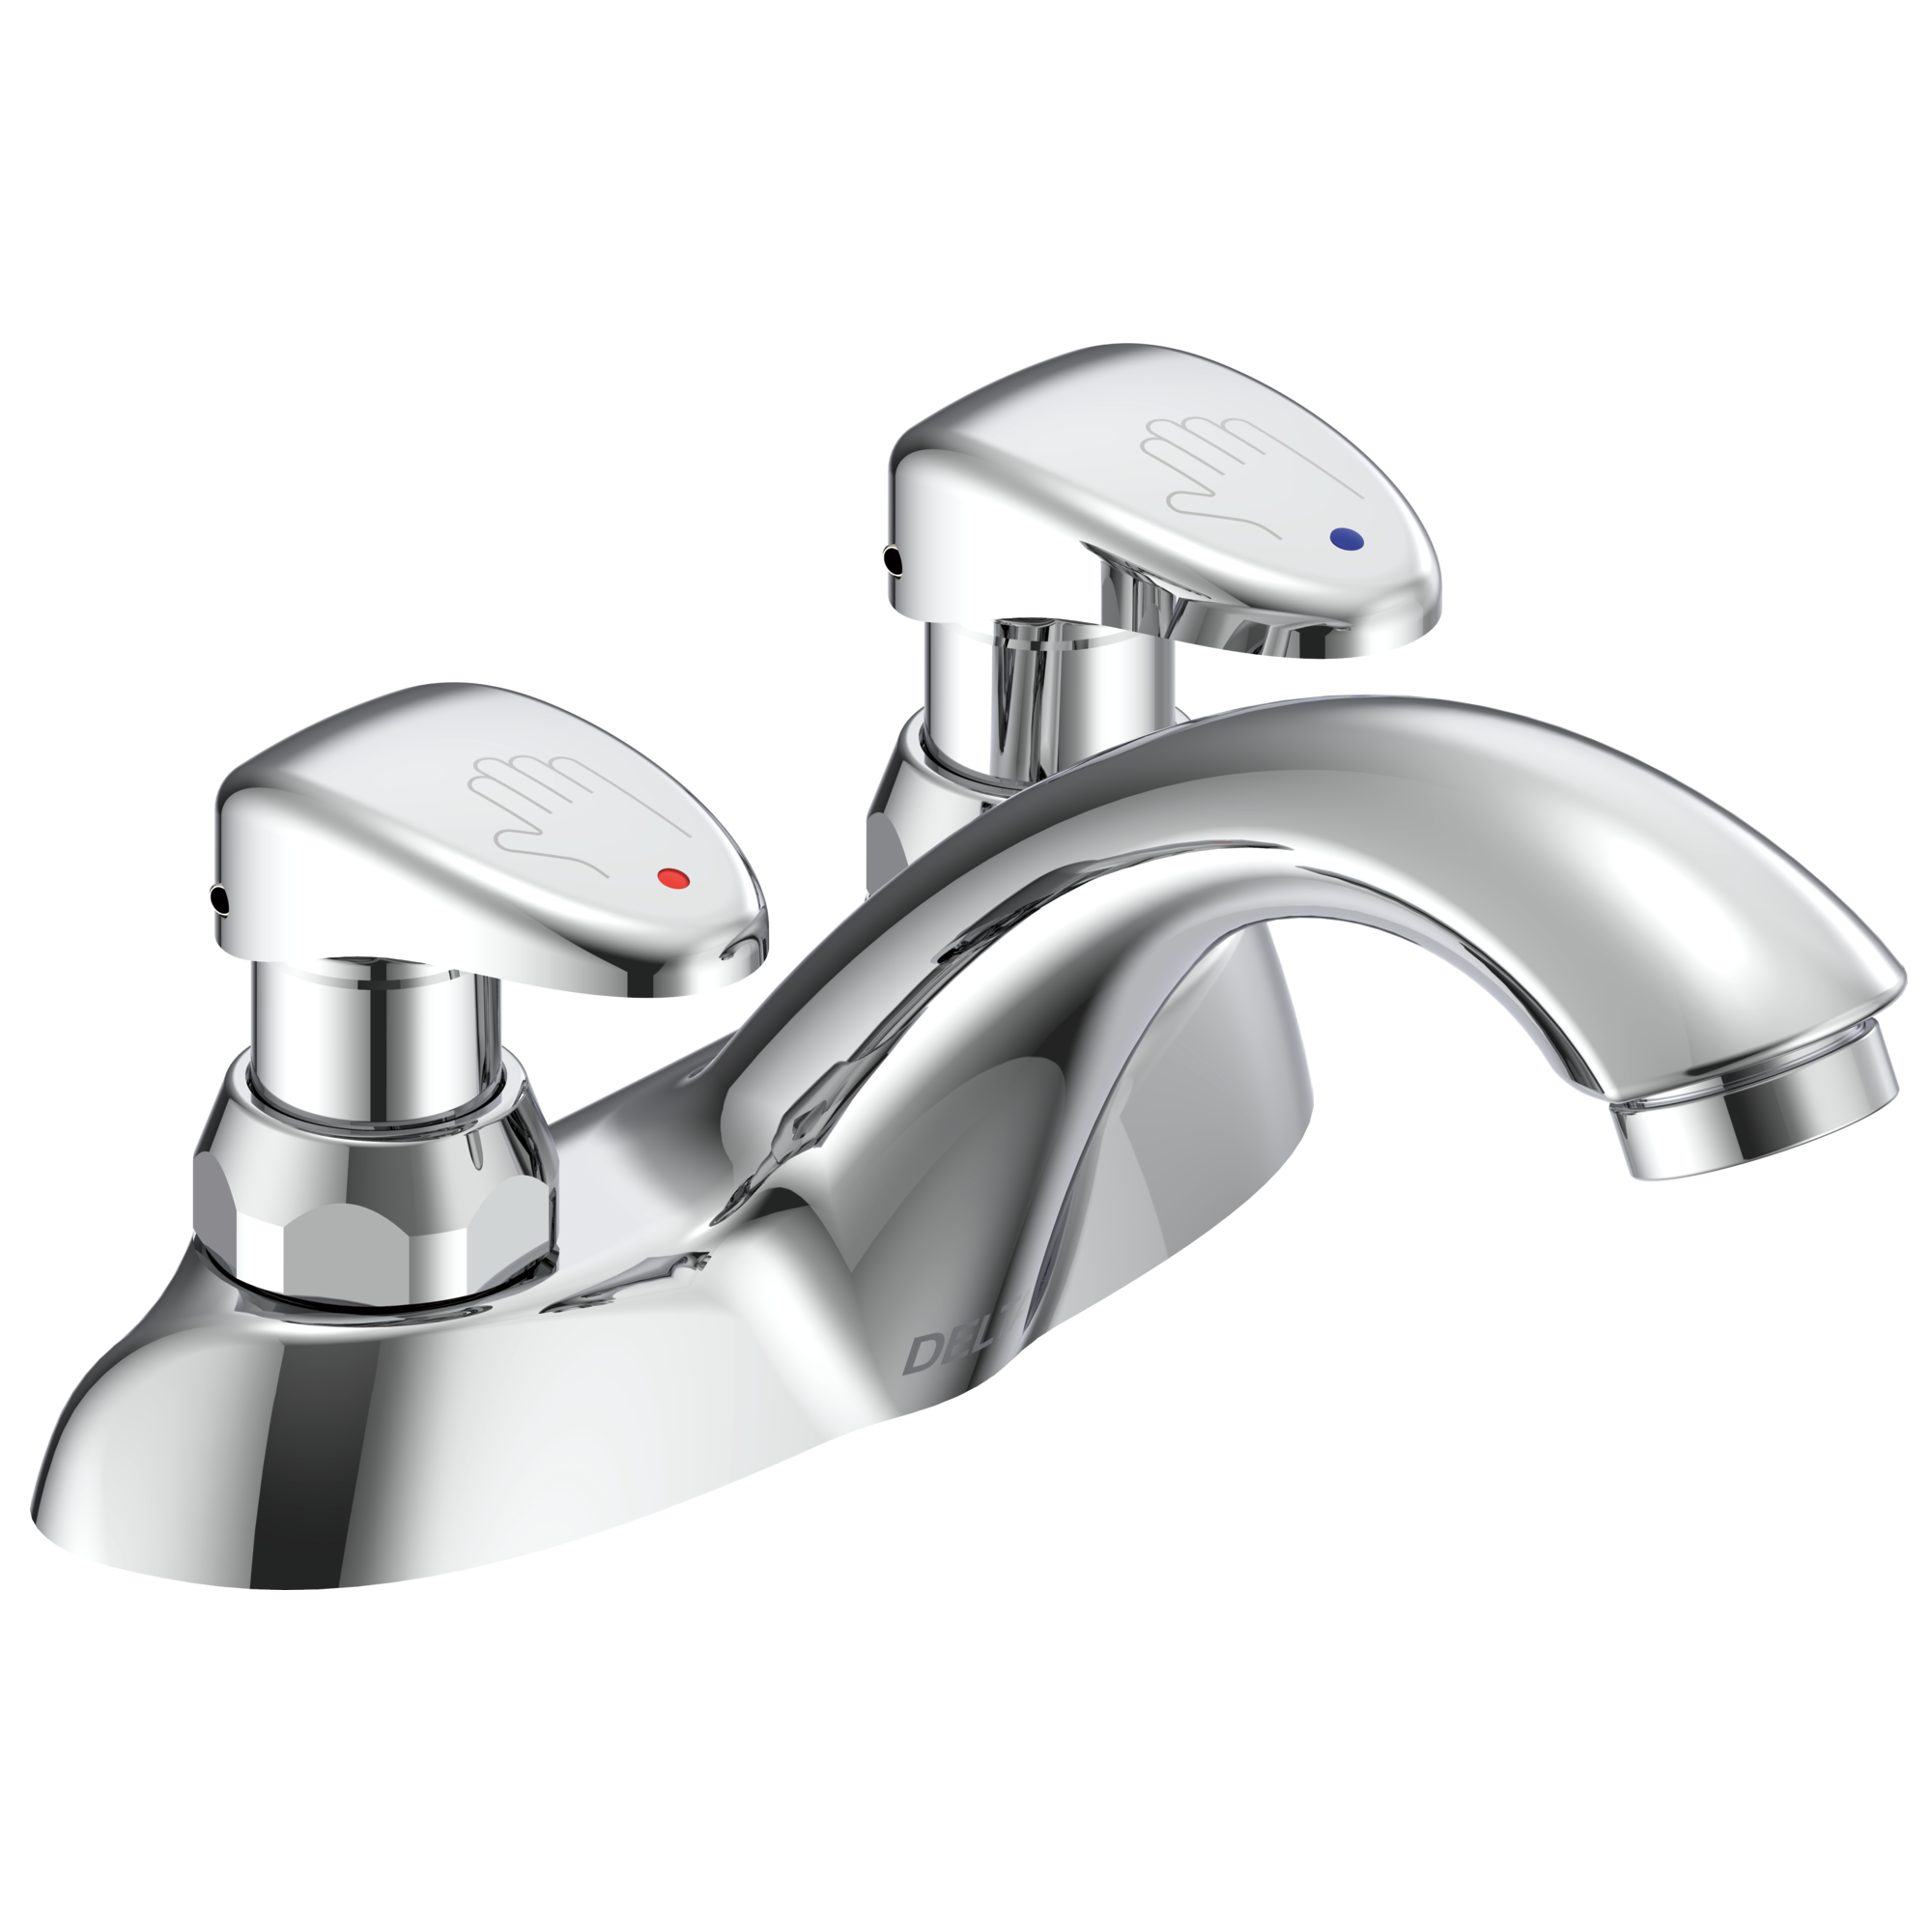 Delta Commercial 86T: Two Handle Metering Slow-Close Bathroom Faucet